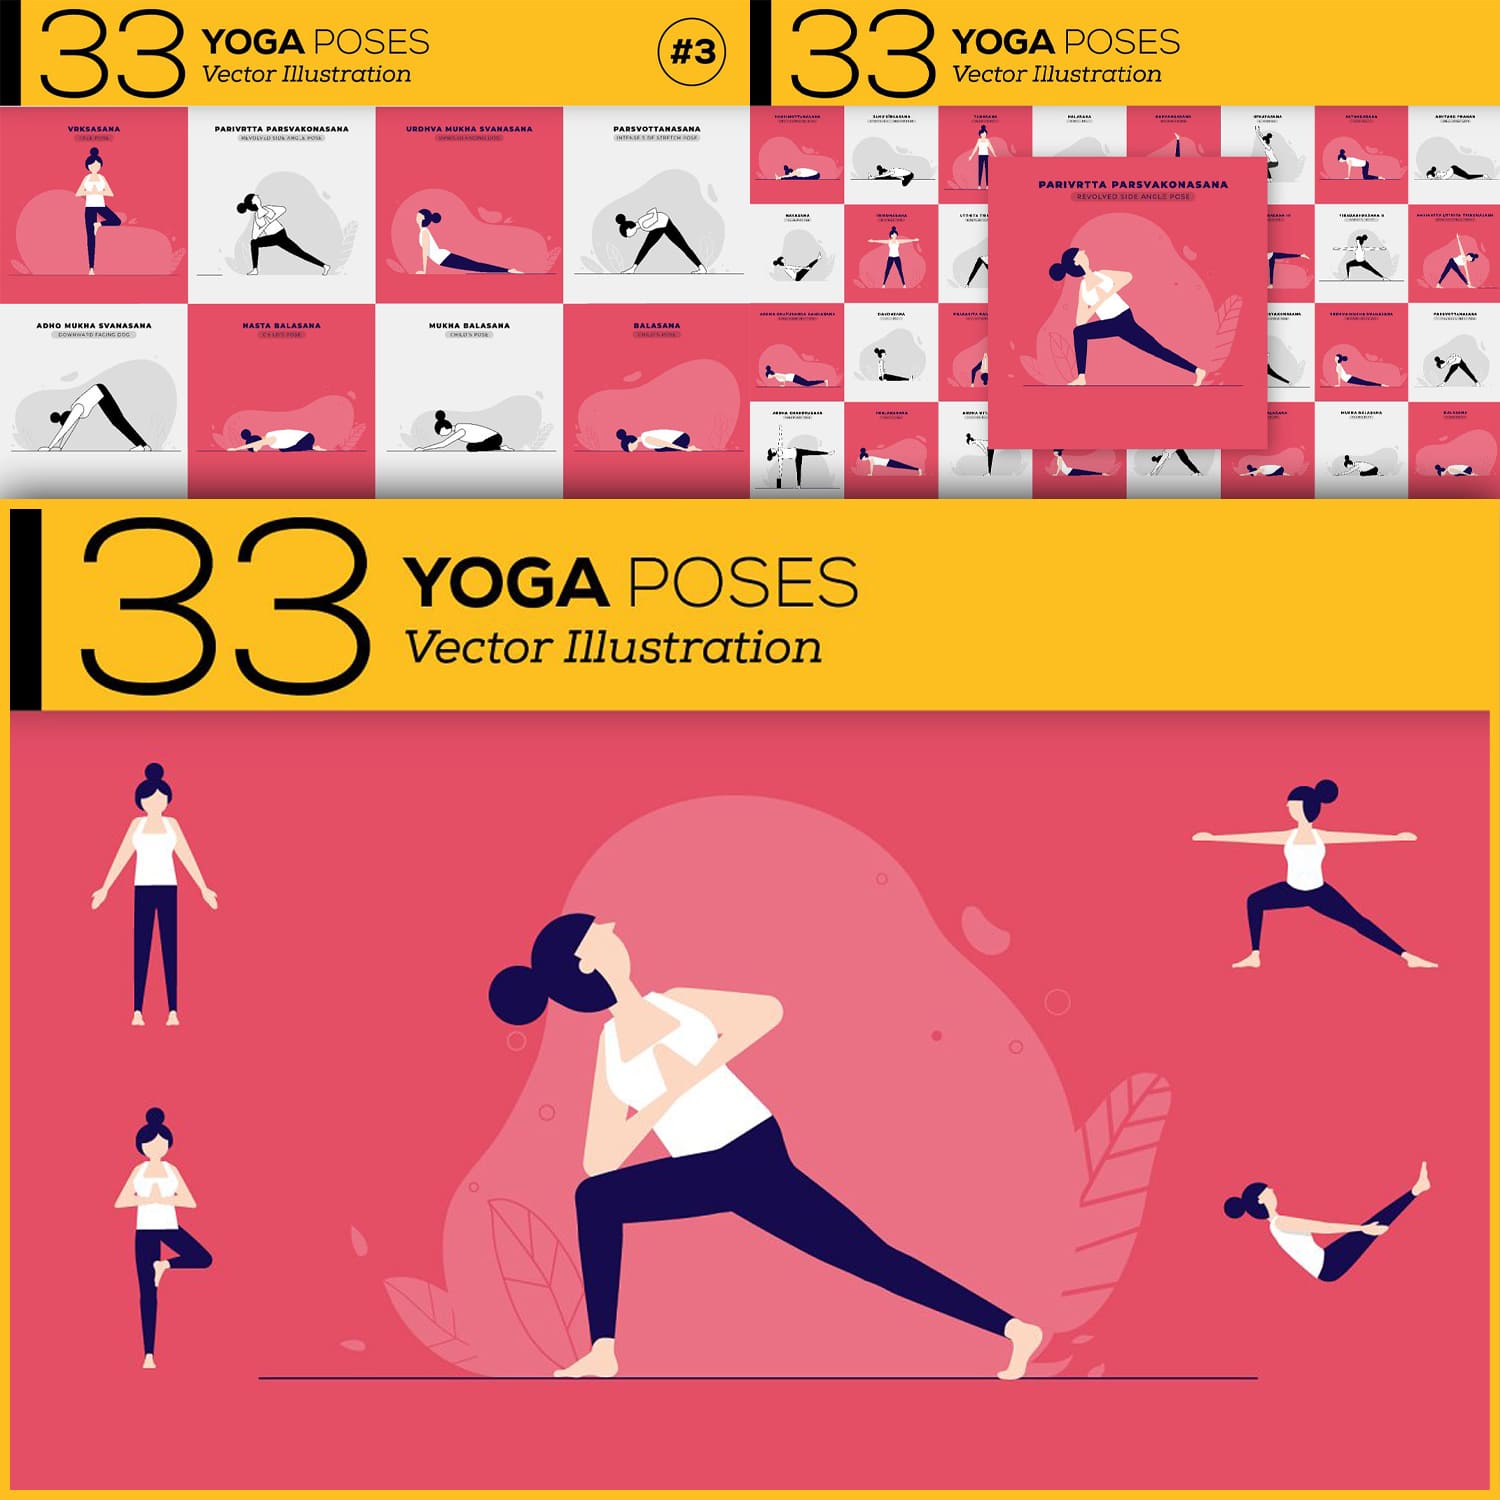 33 Yoga Poses Illustration created by Kursat Unsal.